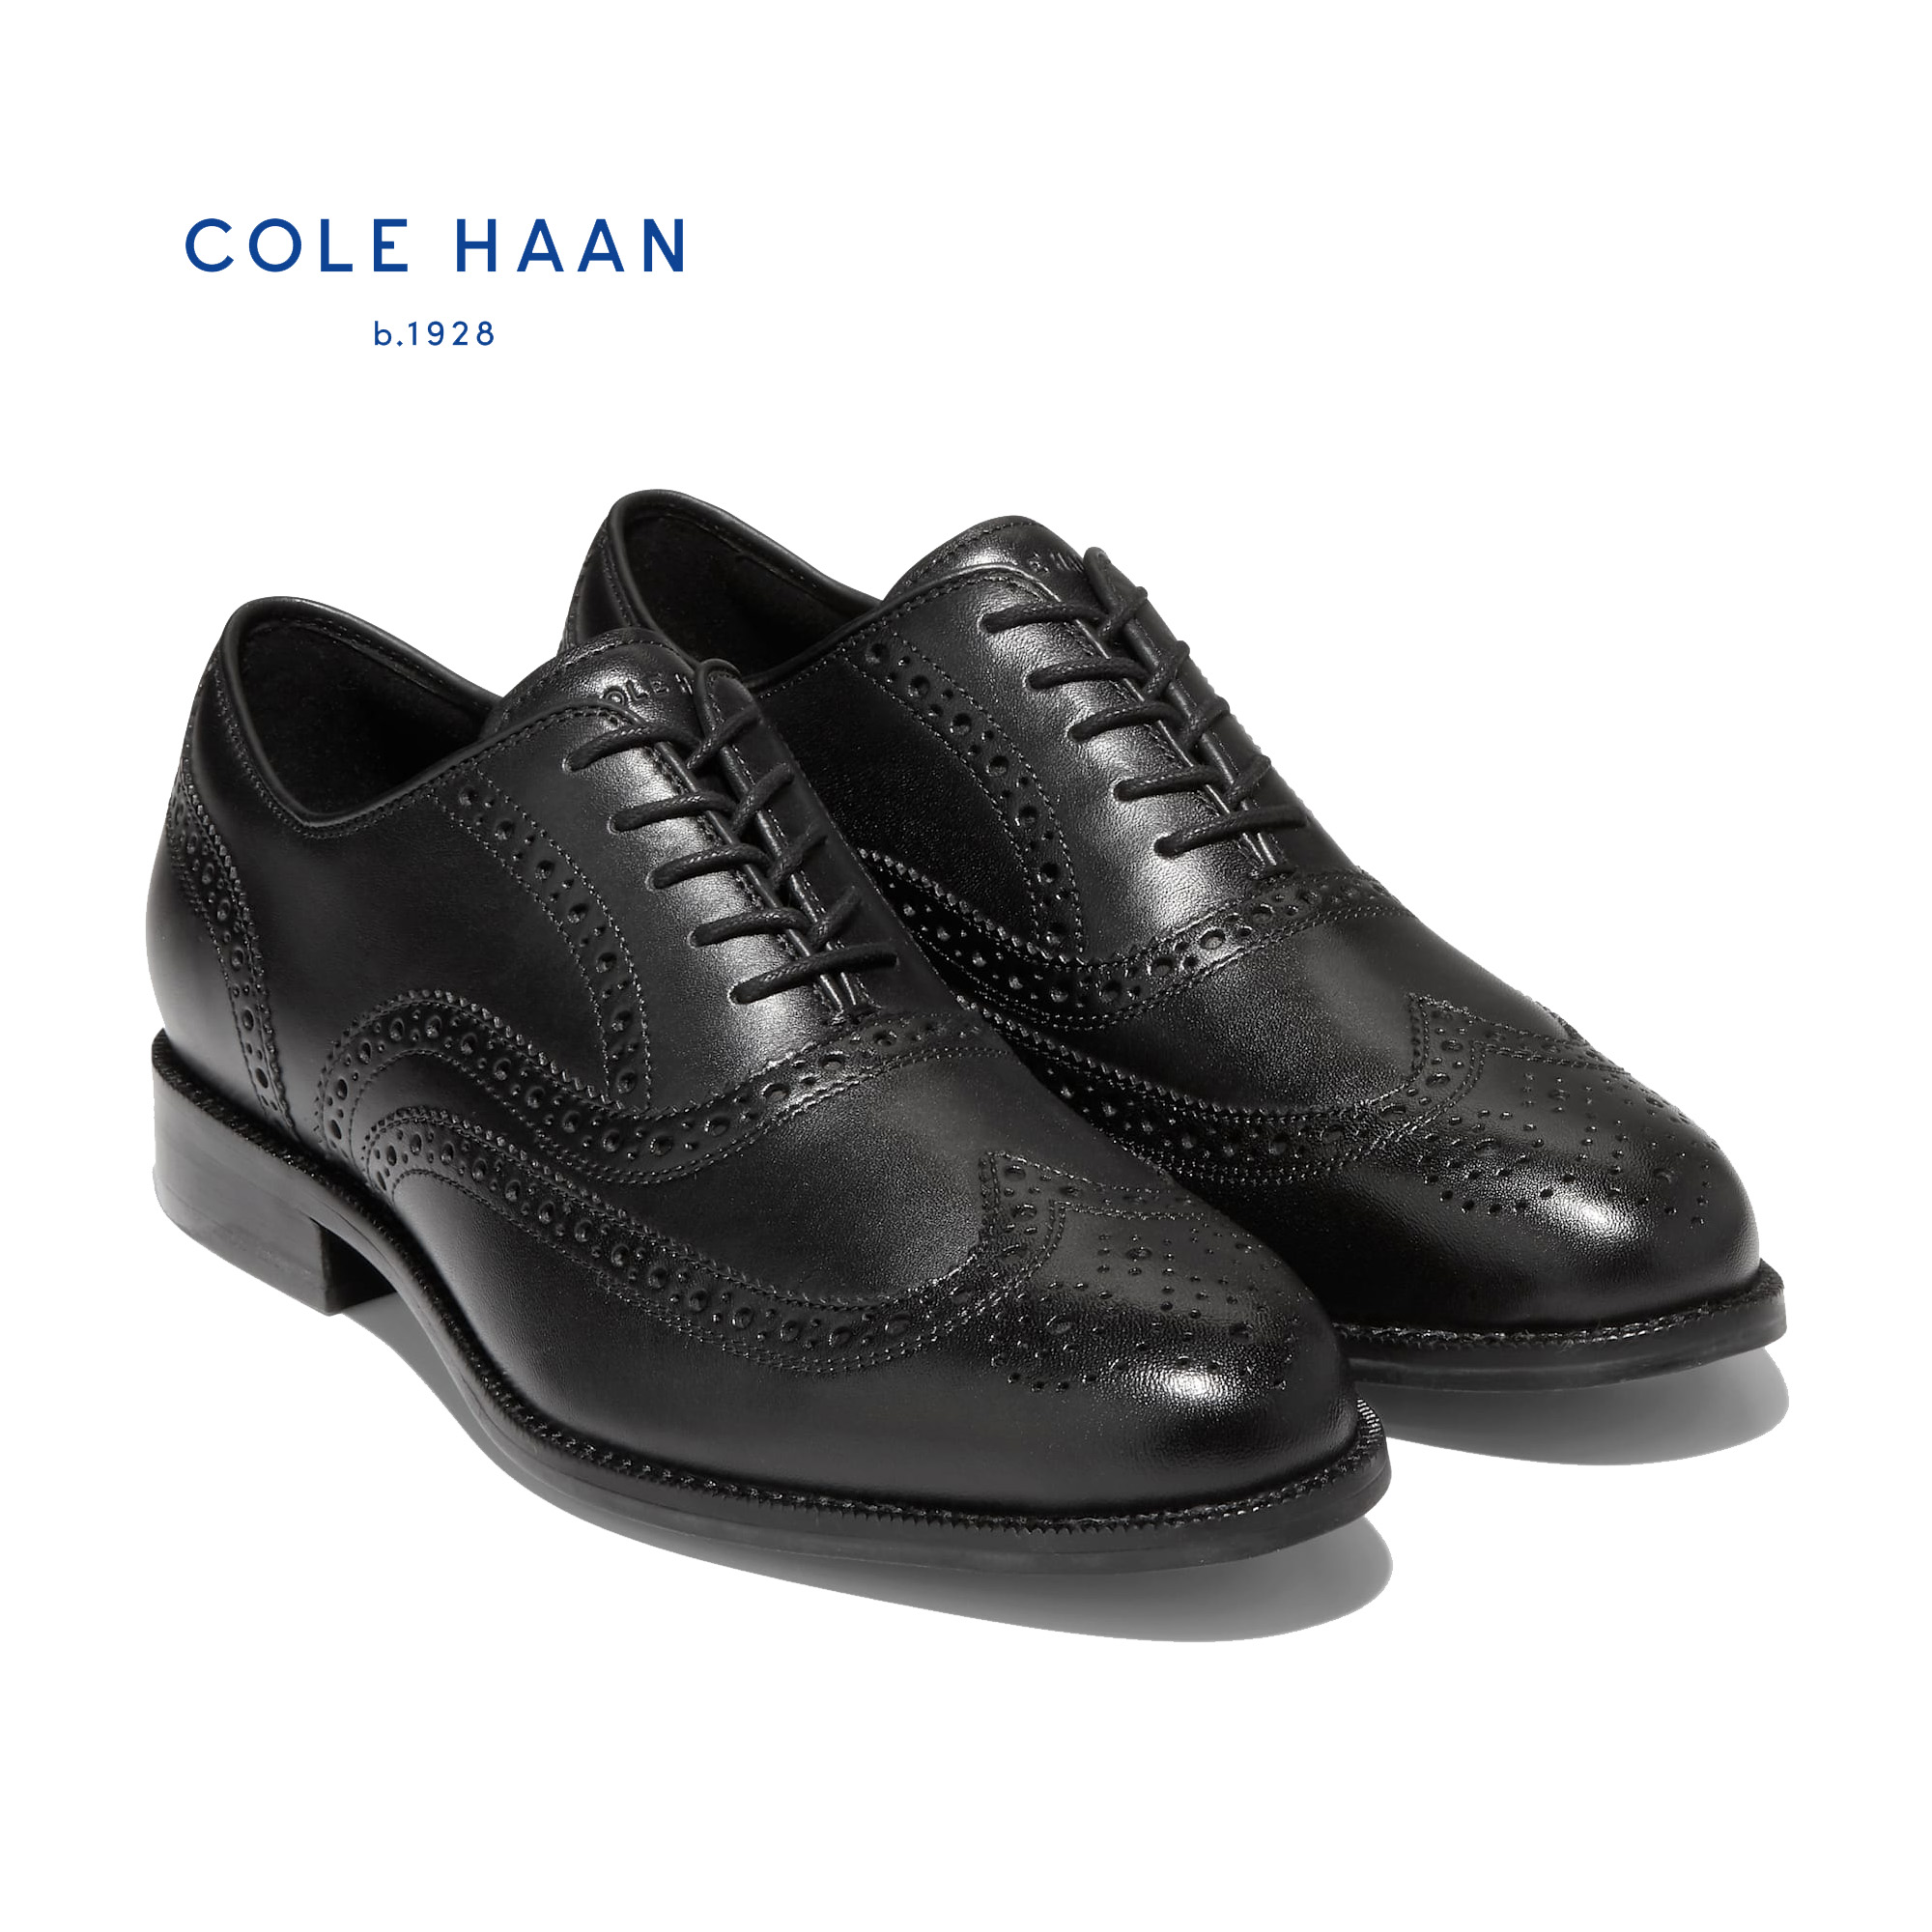 Cole Haan C38022 ZERØGRAND Wingtip Oxford Shoes for Men